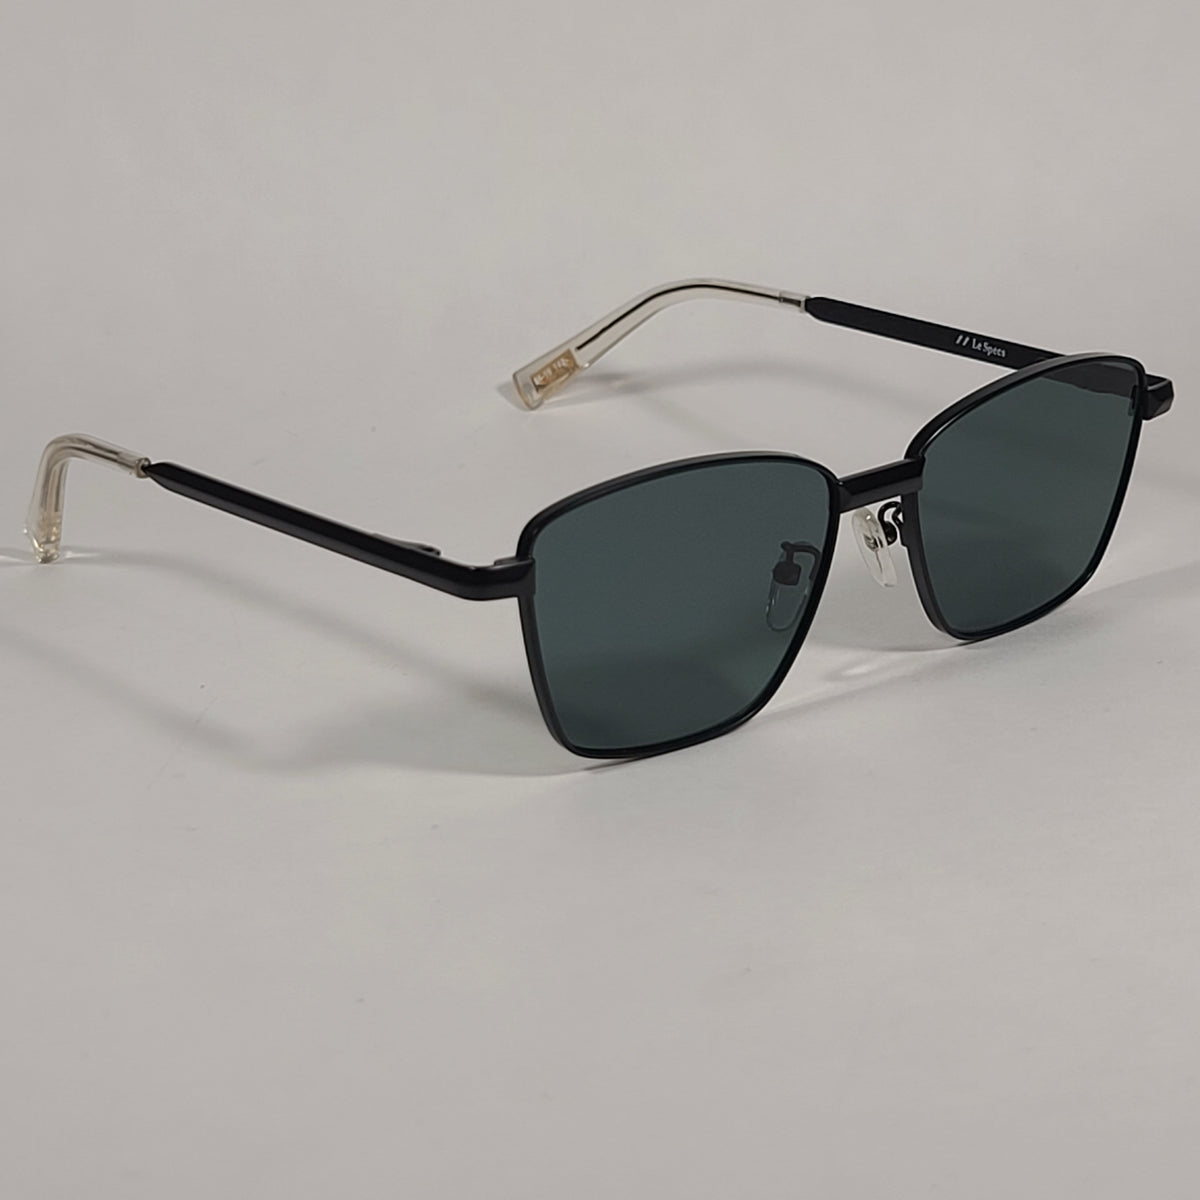 Le Supastar Square Sunglasses Matte Black Metal Frame Green Tint